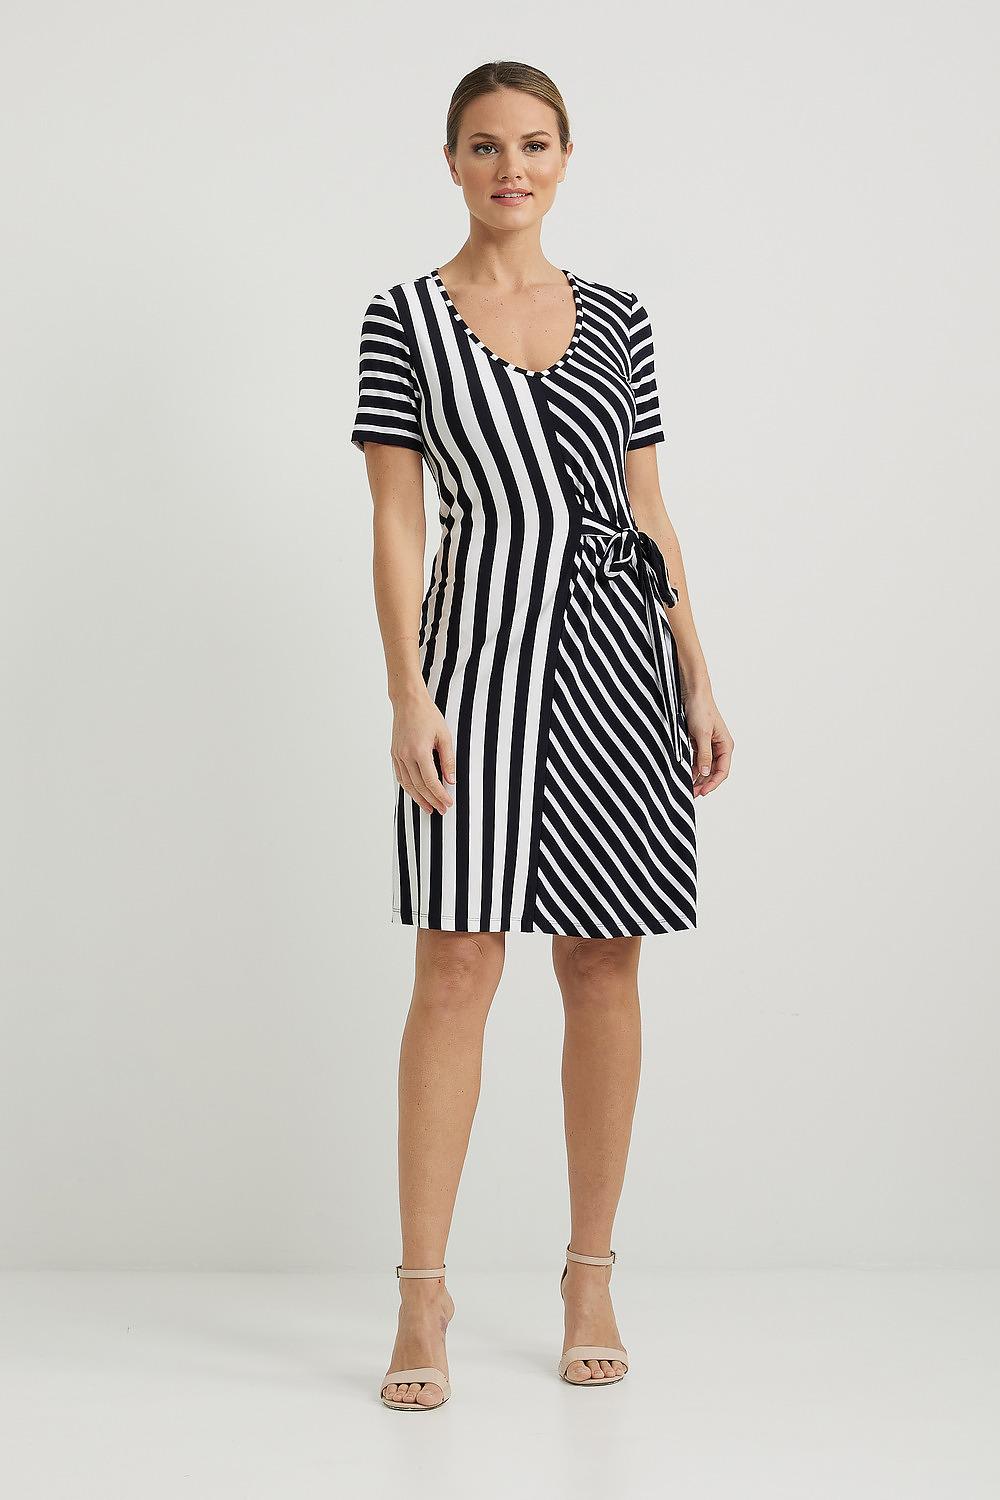 Joseph Ribkoff Mixed Stripe Dress Style 222139. Midnight Blue/white